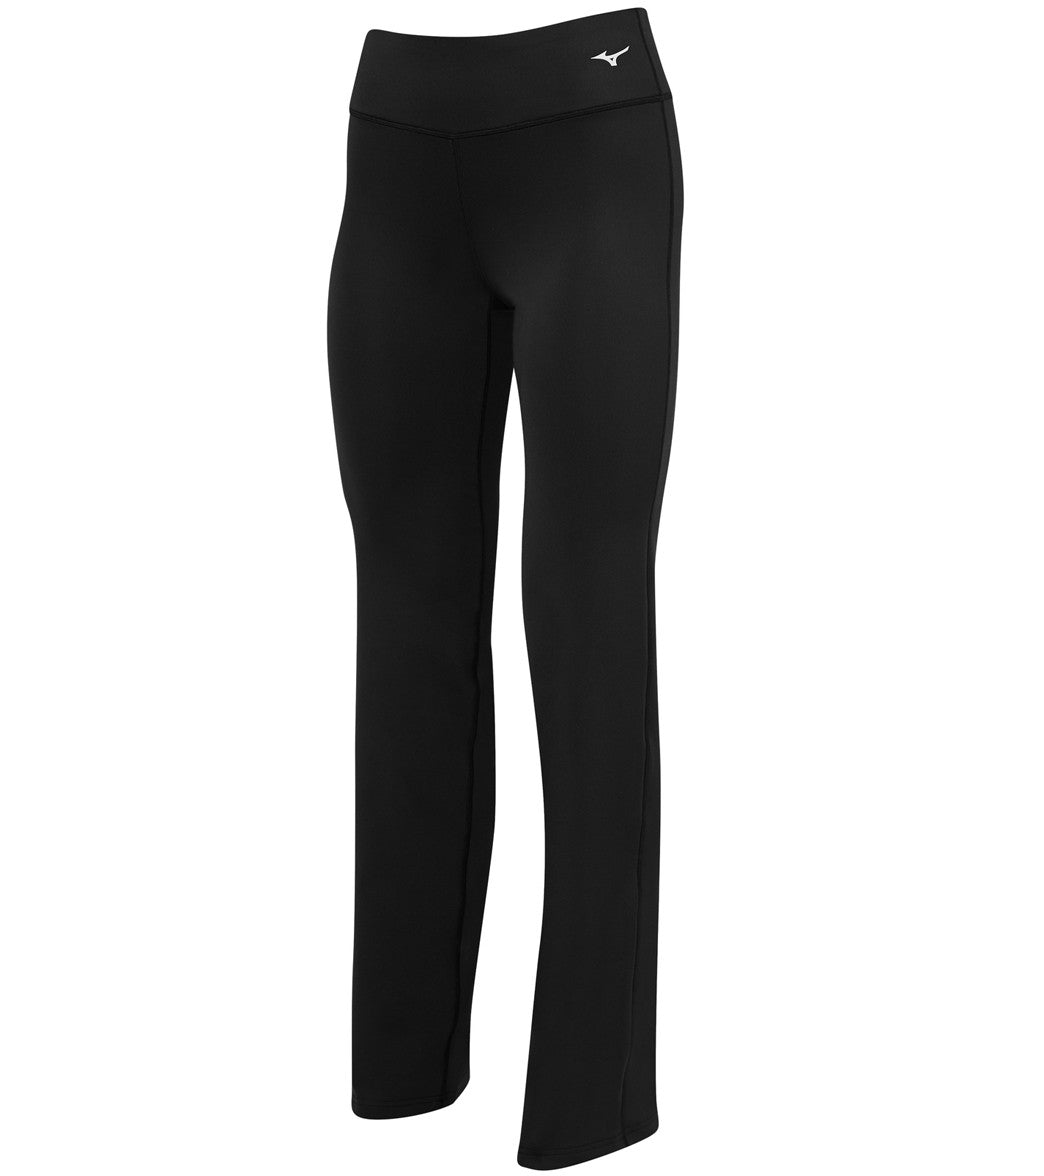 Mizuno Women's Align Long Volleyball Pants - Black Large - Swimoutlet.com